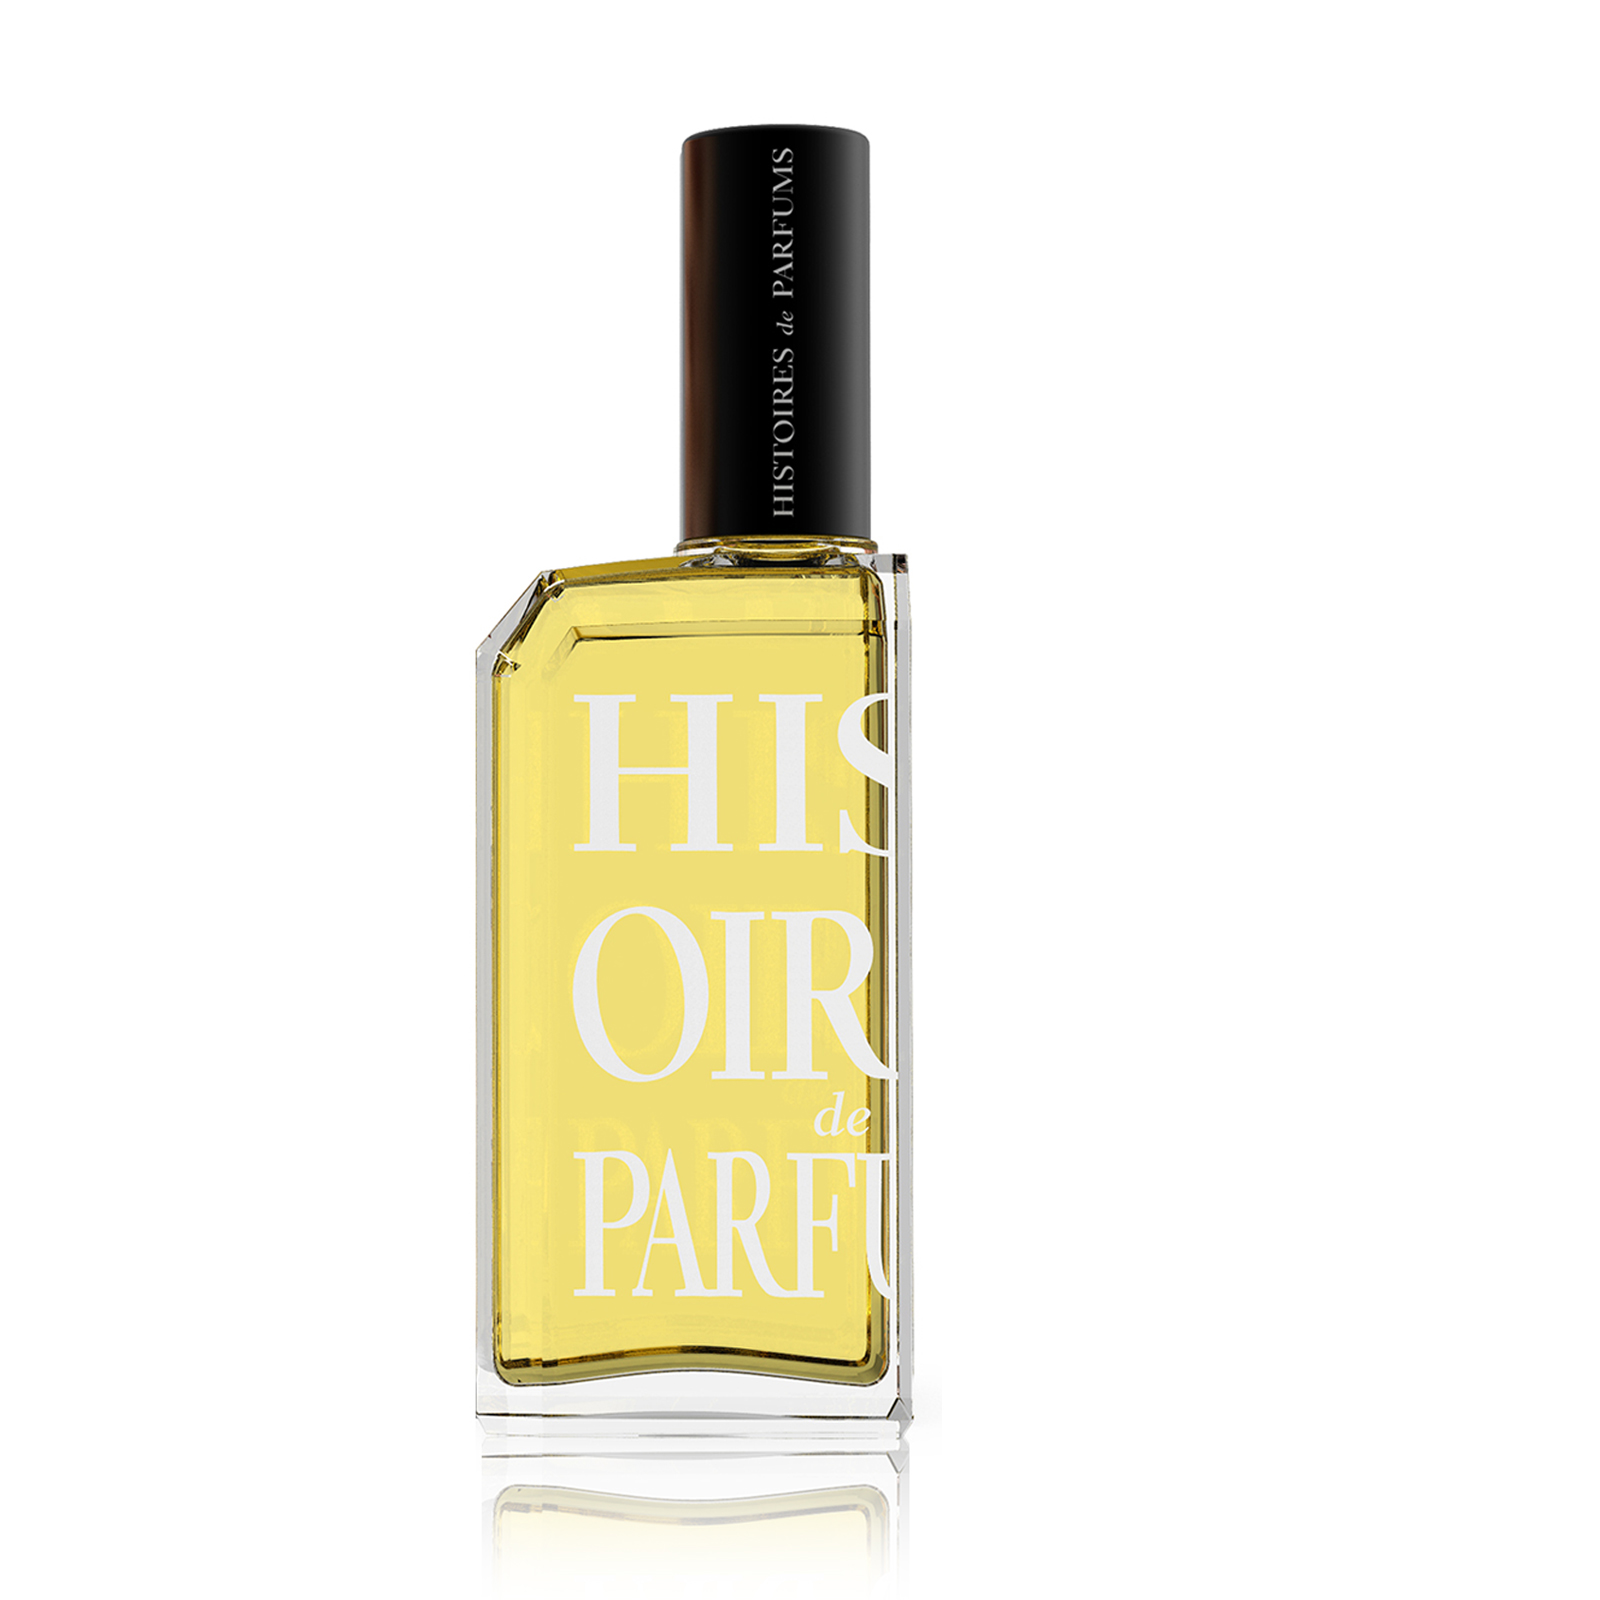 Купить Histoires de Parfums 7753 60 ml.